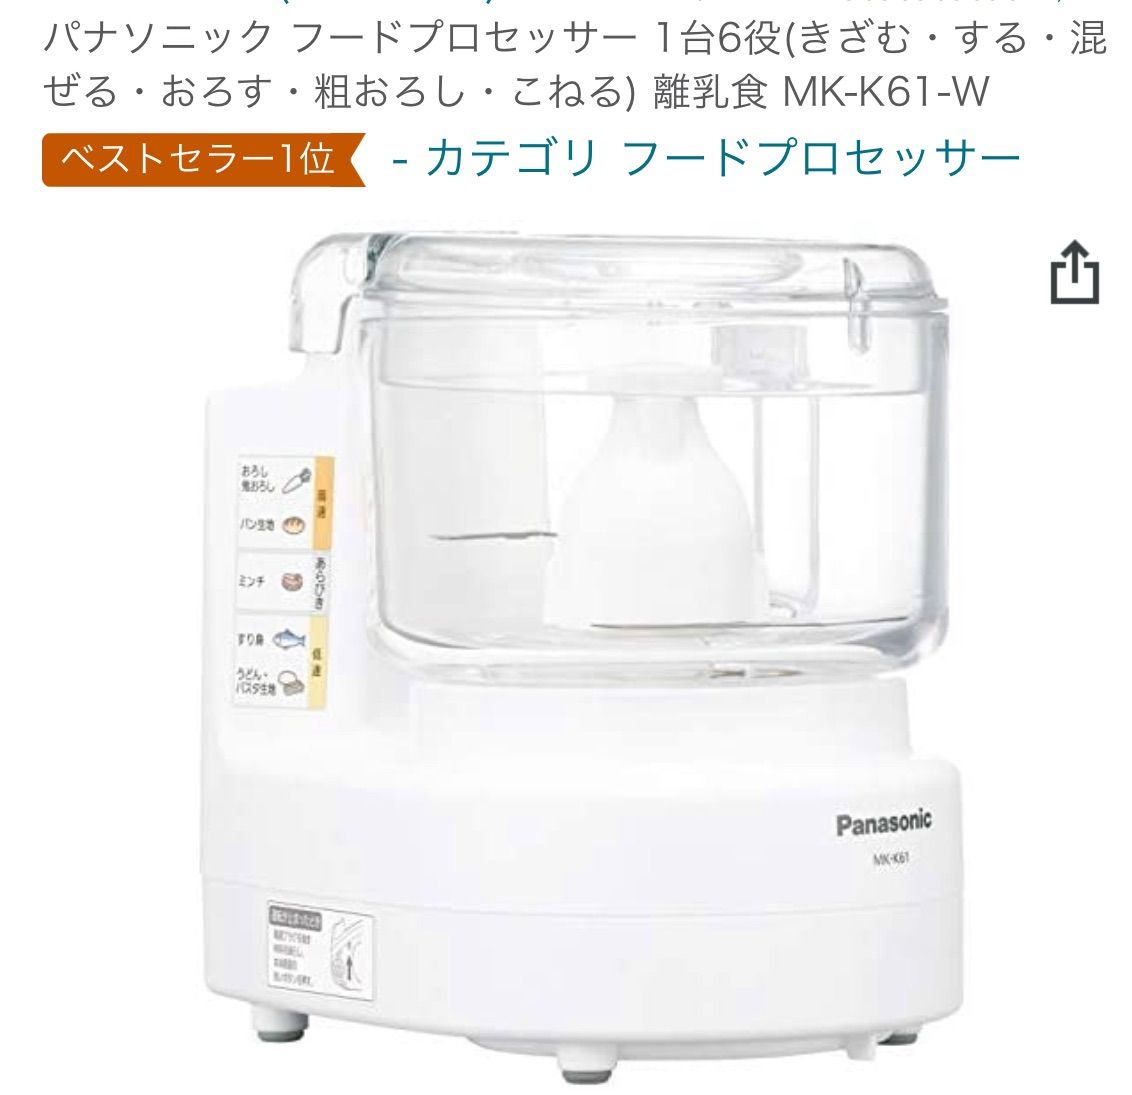 Panasonic フードプロセッサーmk-k61-w☆新品未開封☆ - Y.S SHOP